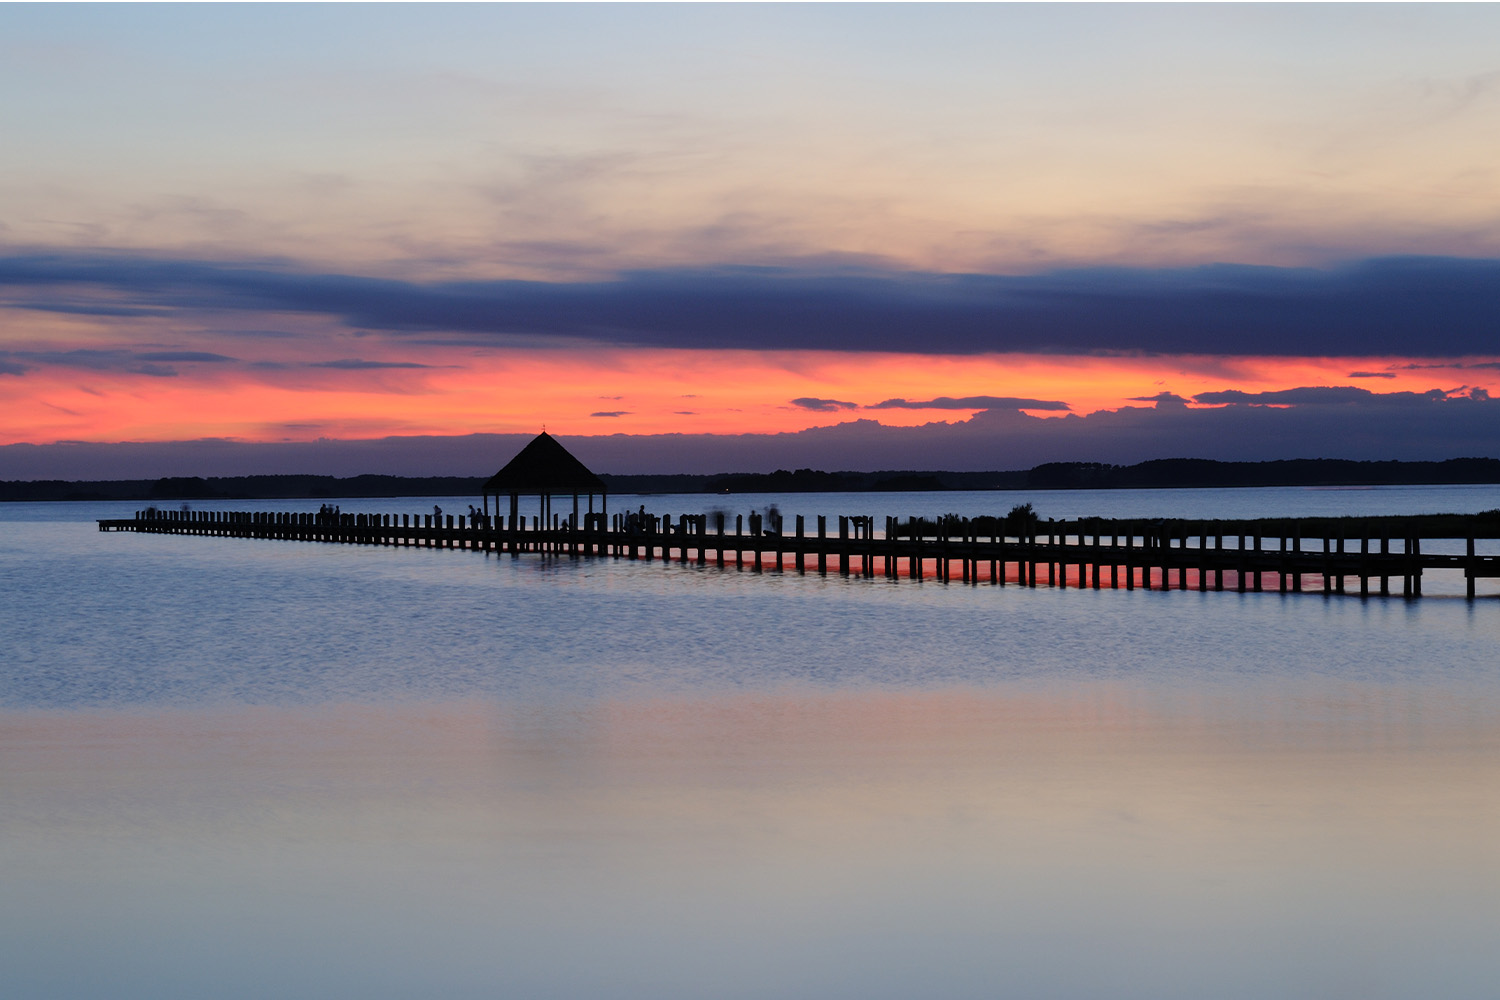 Fishing pier at sunset, Ocean City, Maryland